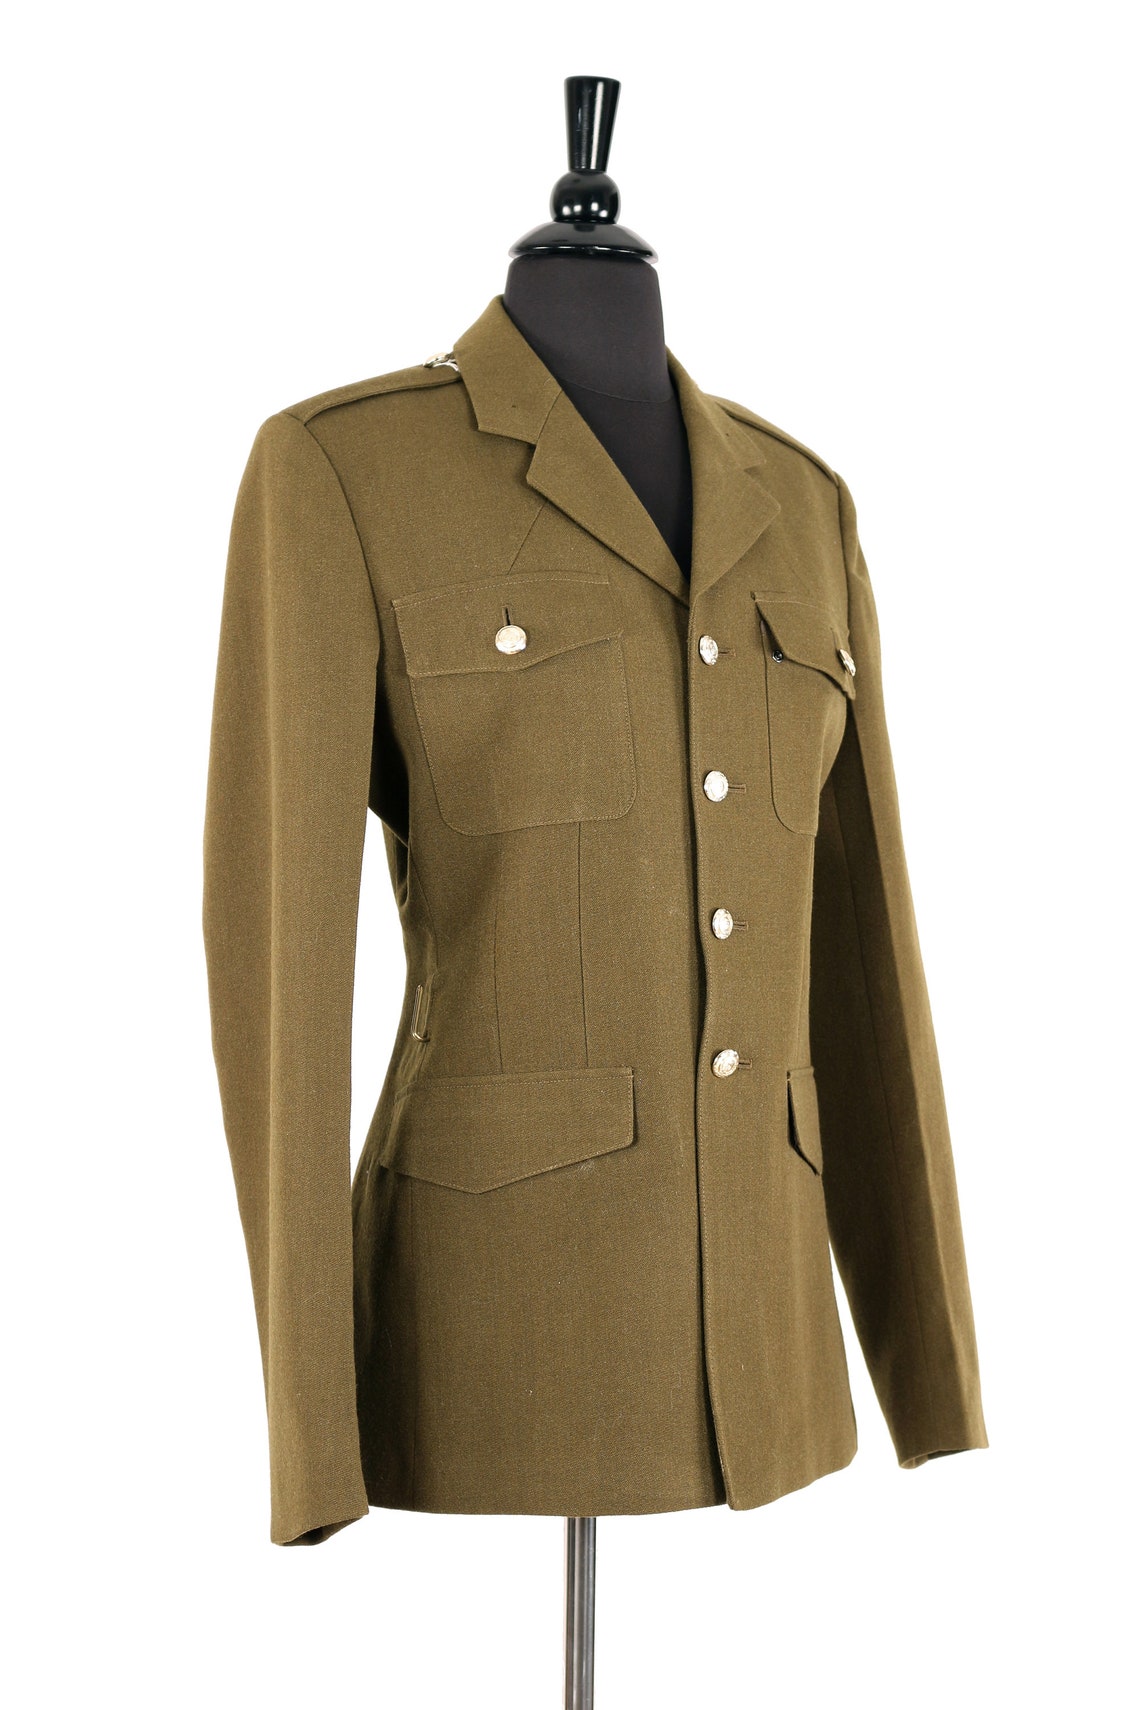 British Army Genuine No. 2 Officerss Dress Uniform Jacket | Etsy